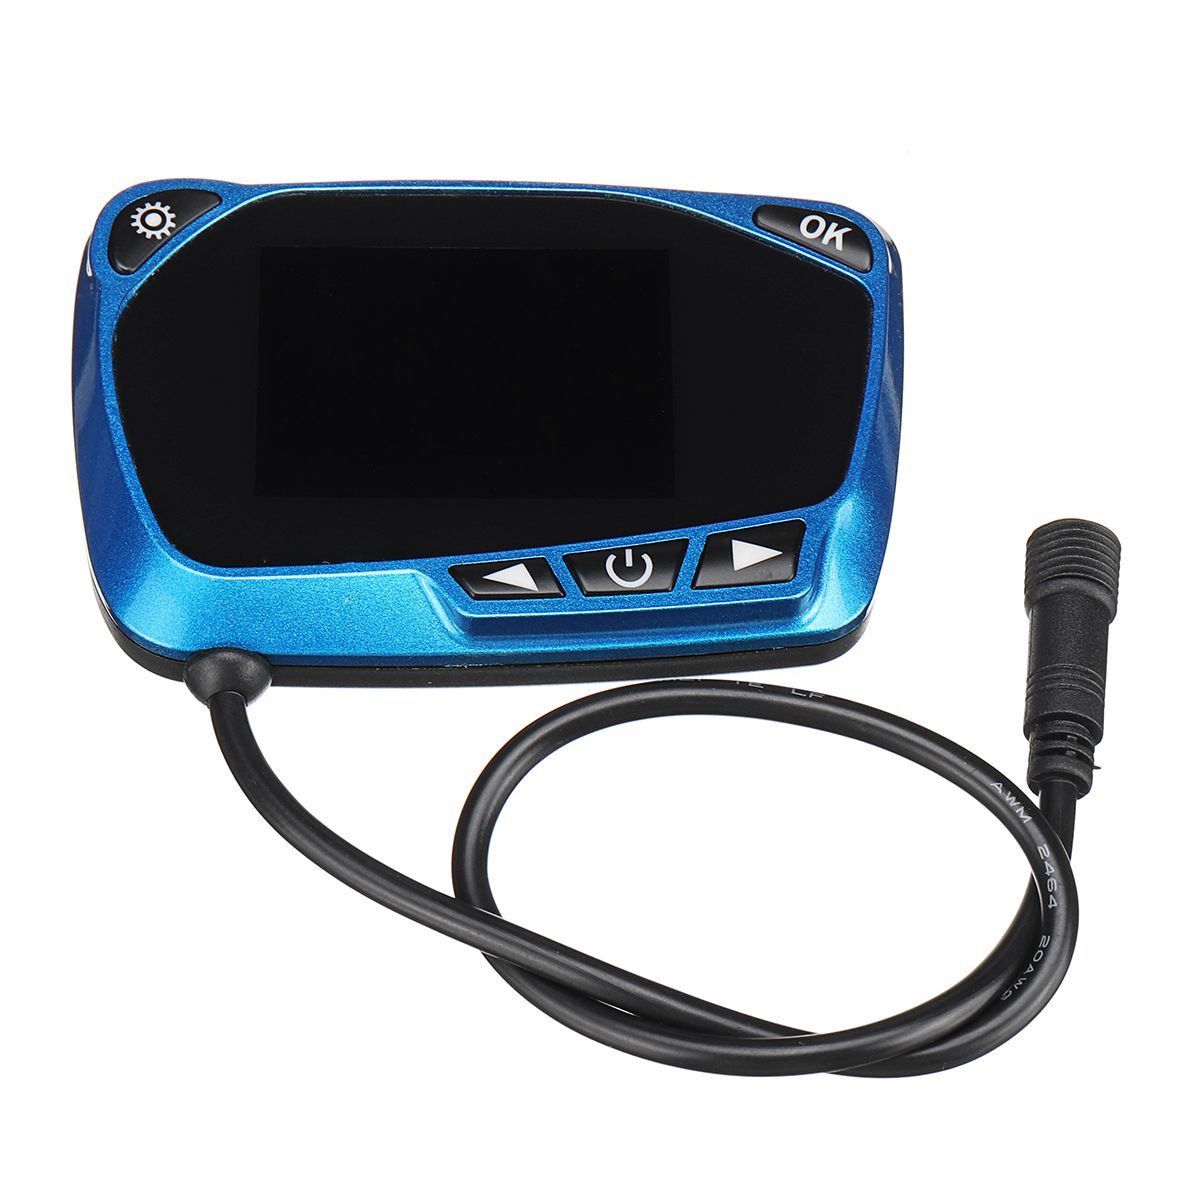 8KW-12V-Car-Diesel-Air-Parking-Heater-Black-Carbon-Fiber-Color-with-Blue-LCD-Thermostat-Remote-Silen-1565894